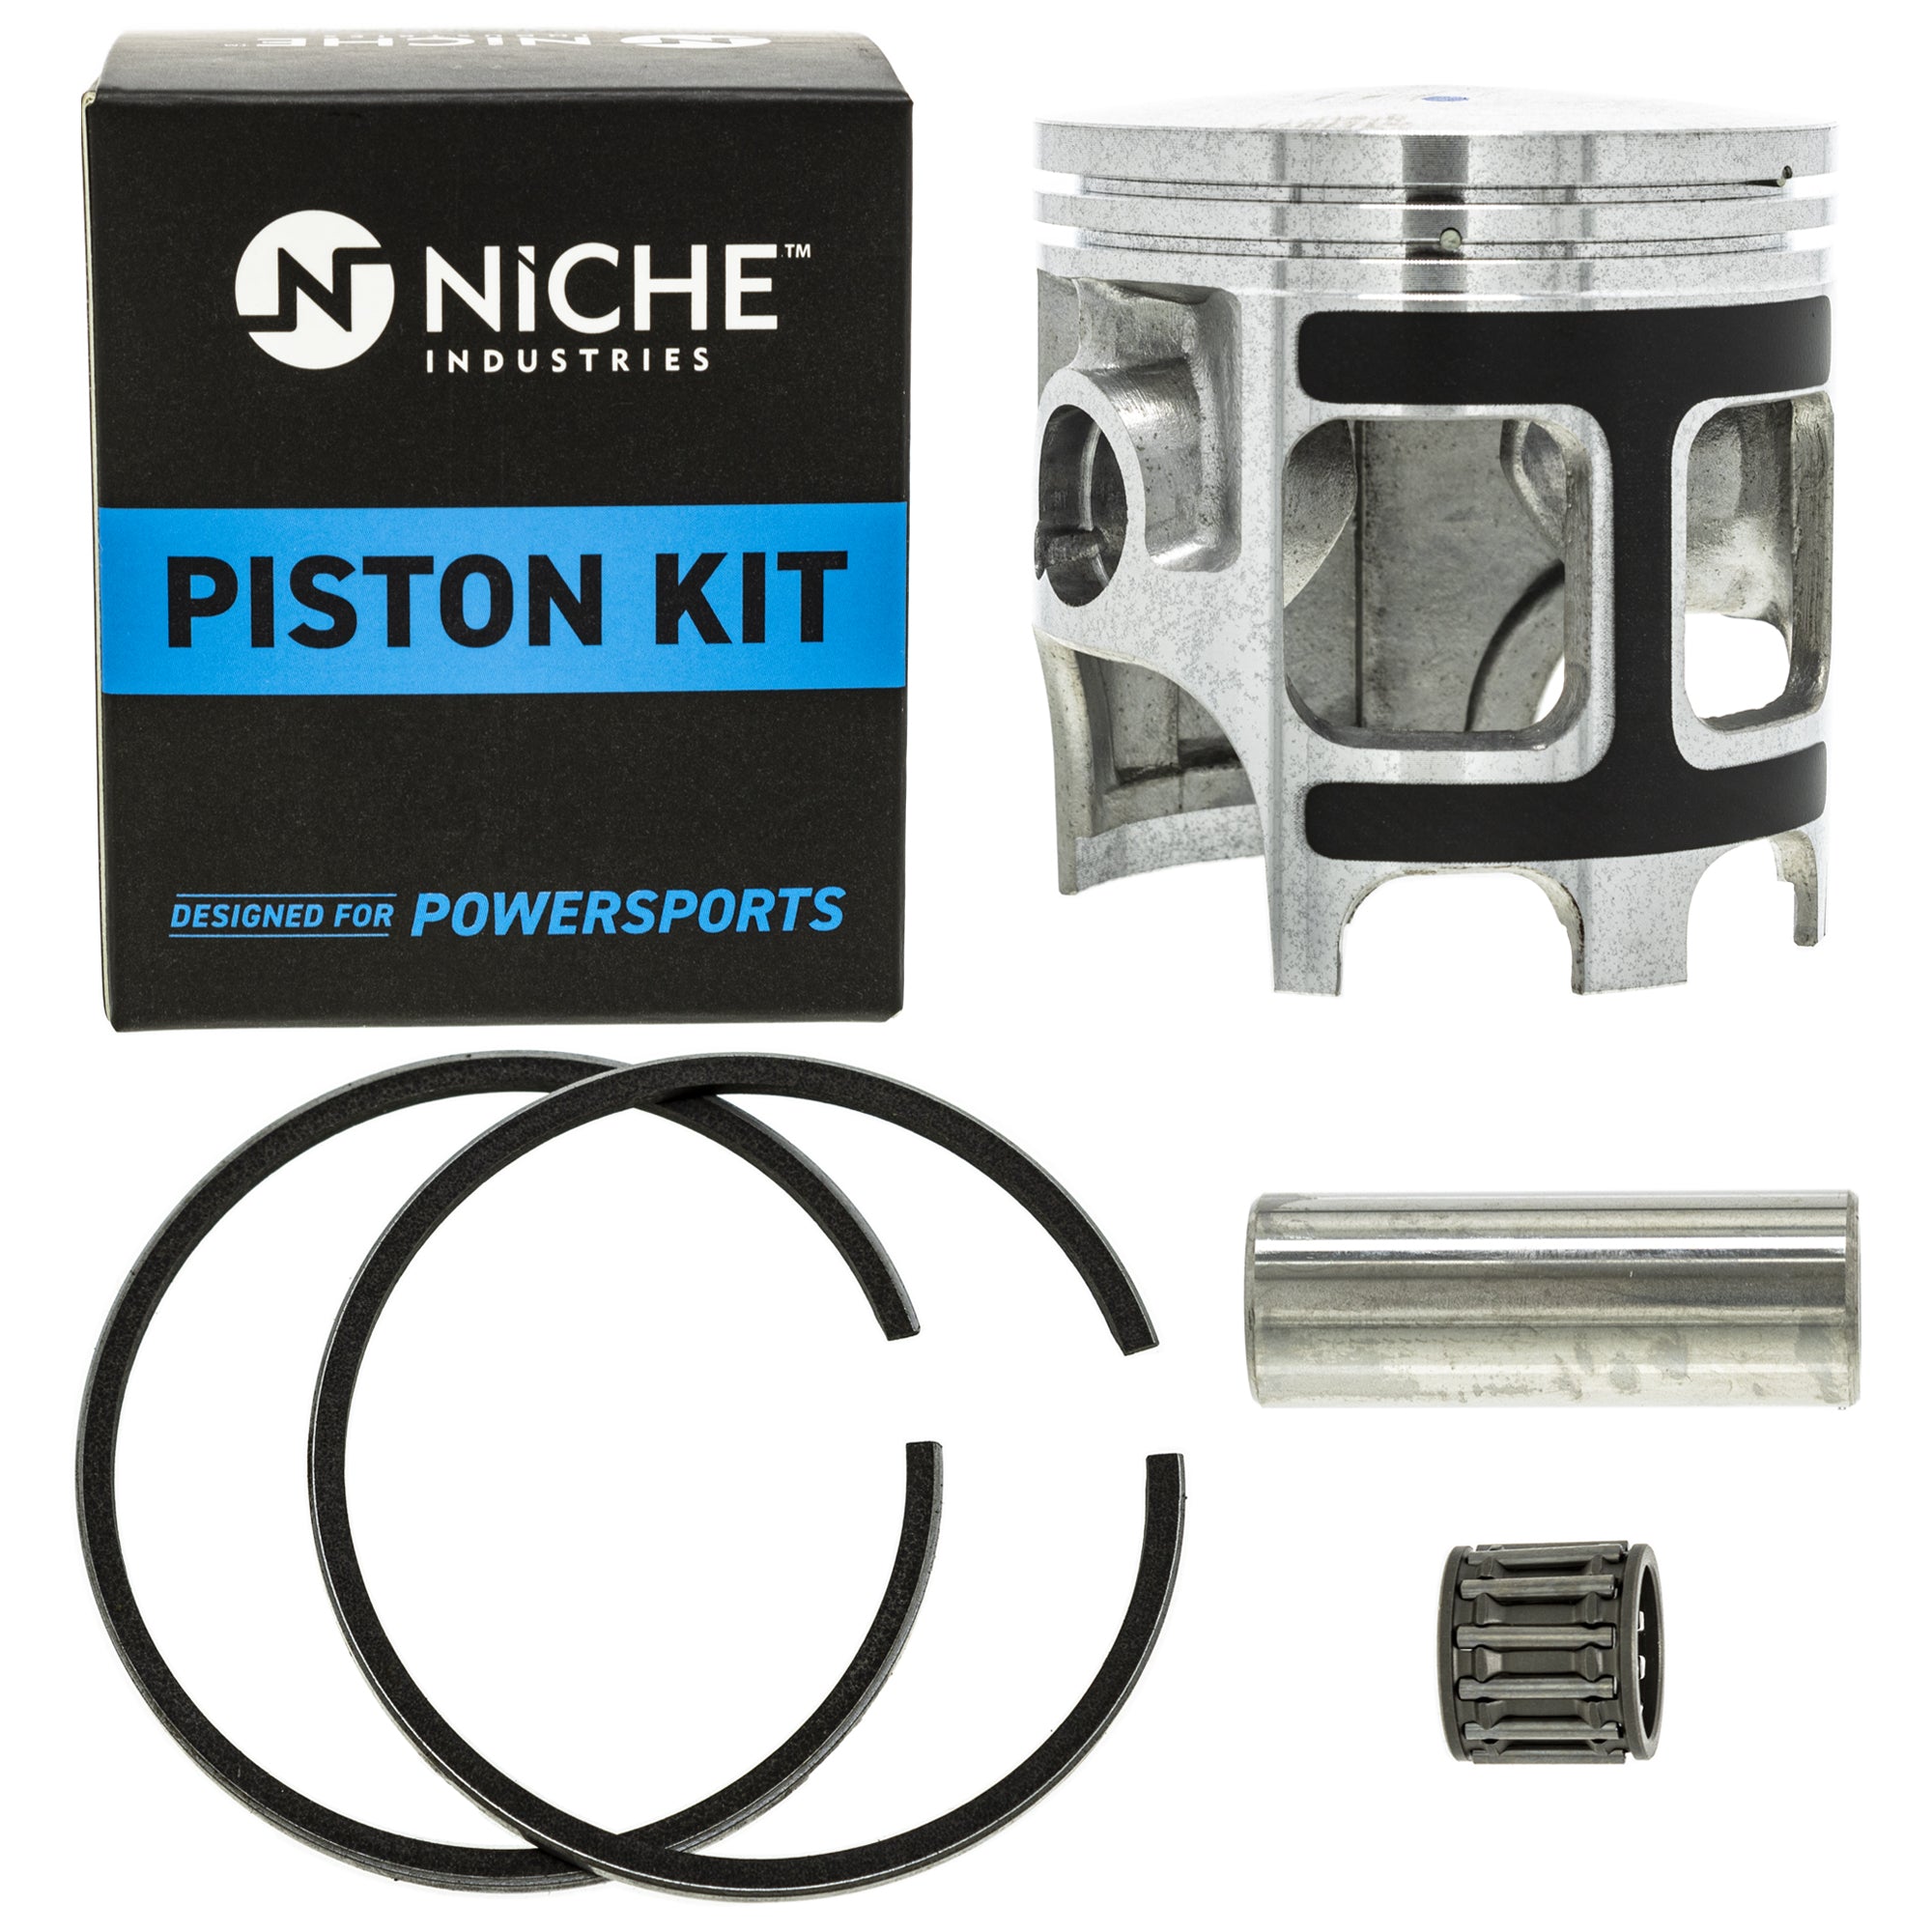 NICHE Piston Kit